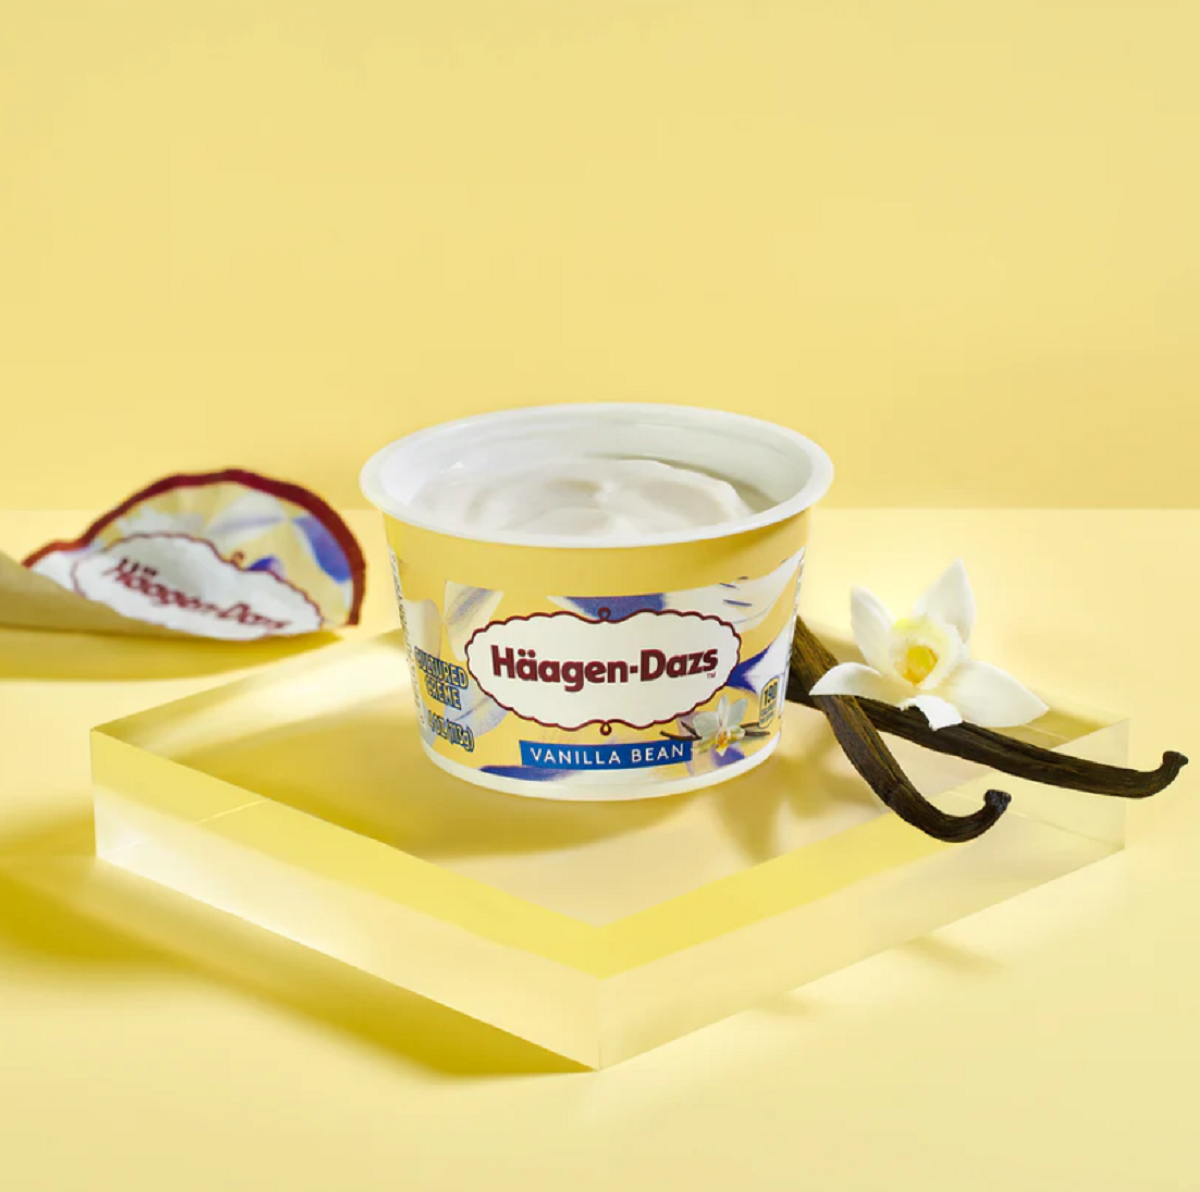 Haagen Dazs yogurt, Haagen Dazs Cultured Creme, Publix deal